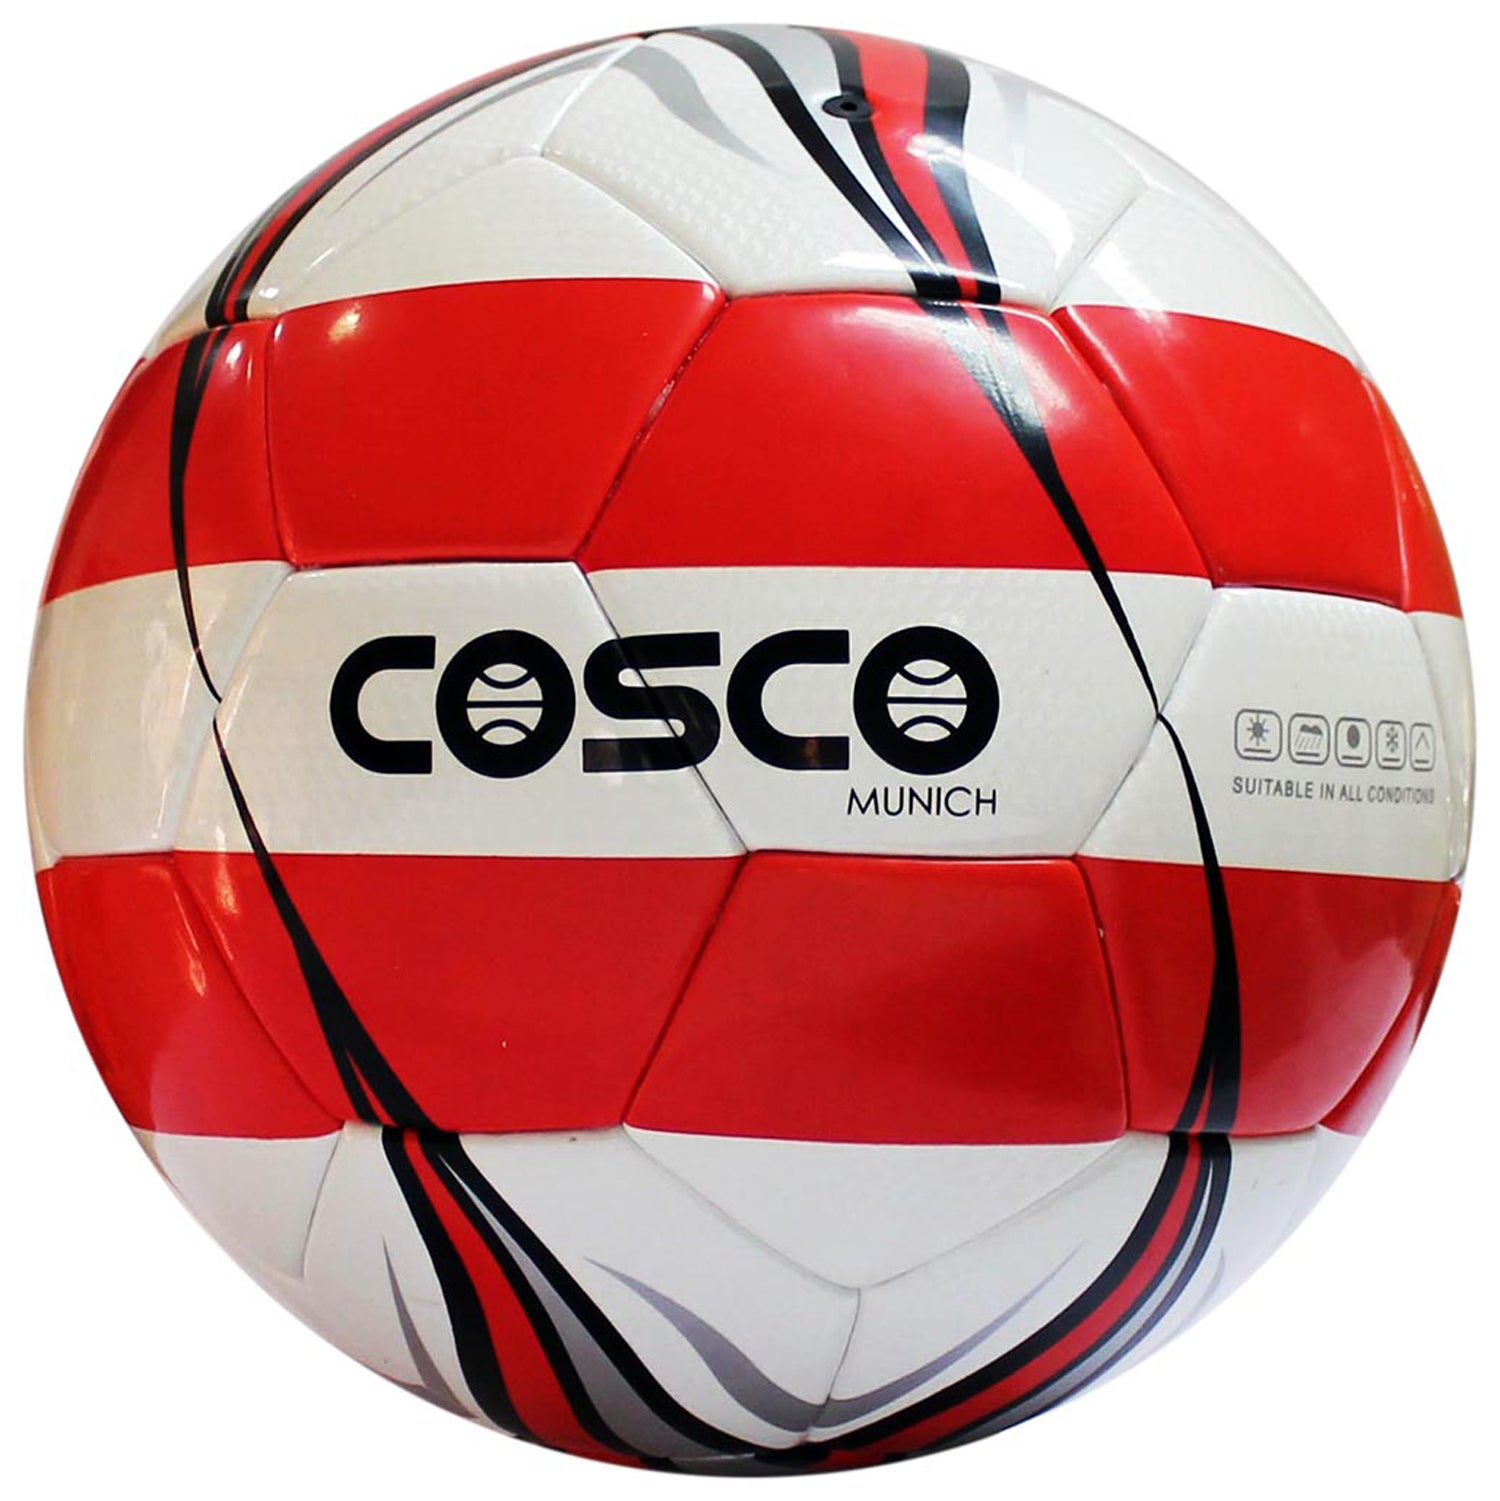 Cosco Munich Football , Black/Red - Size 5 - Best Price online Prokicksports.com